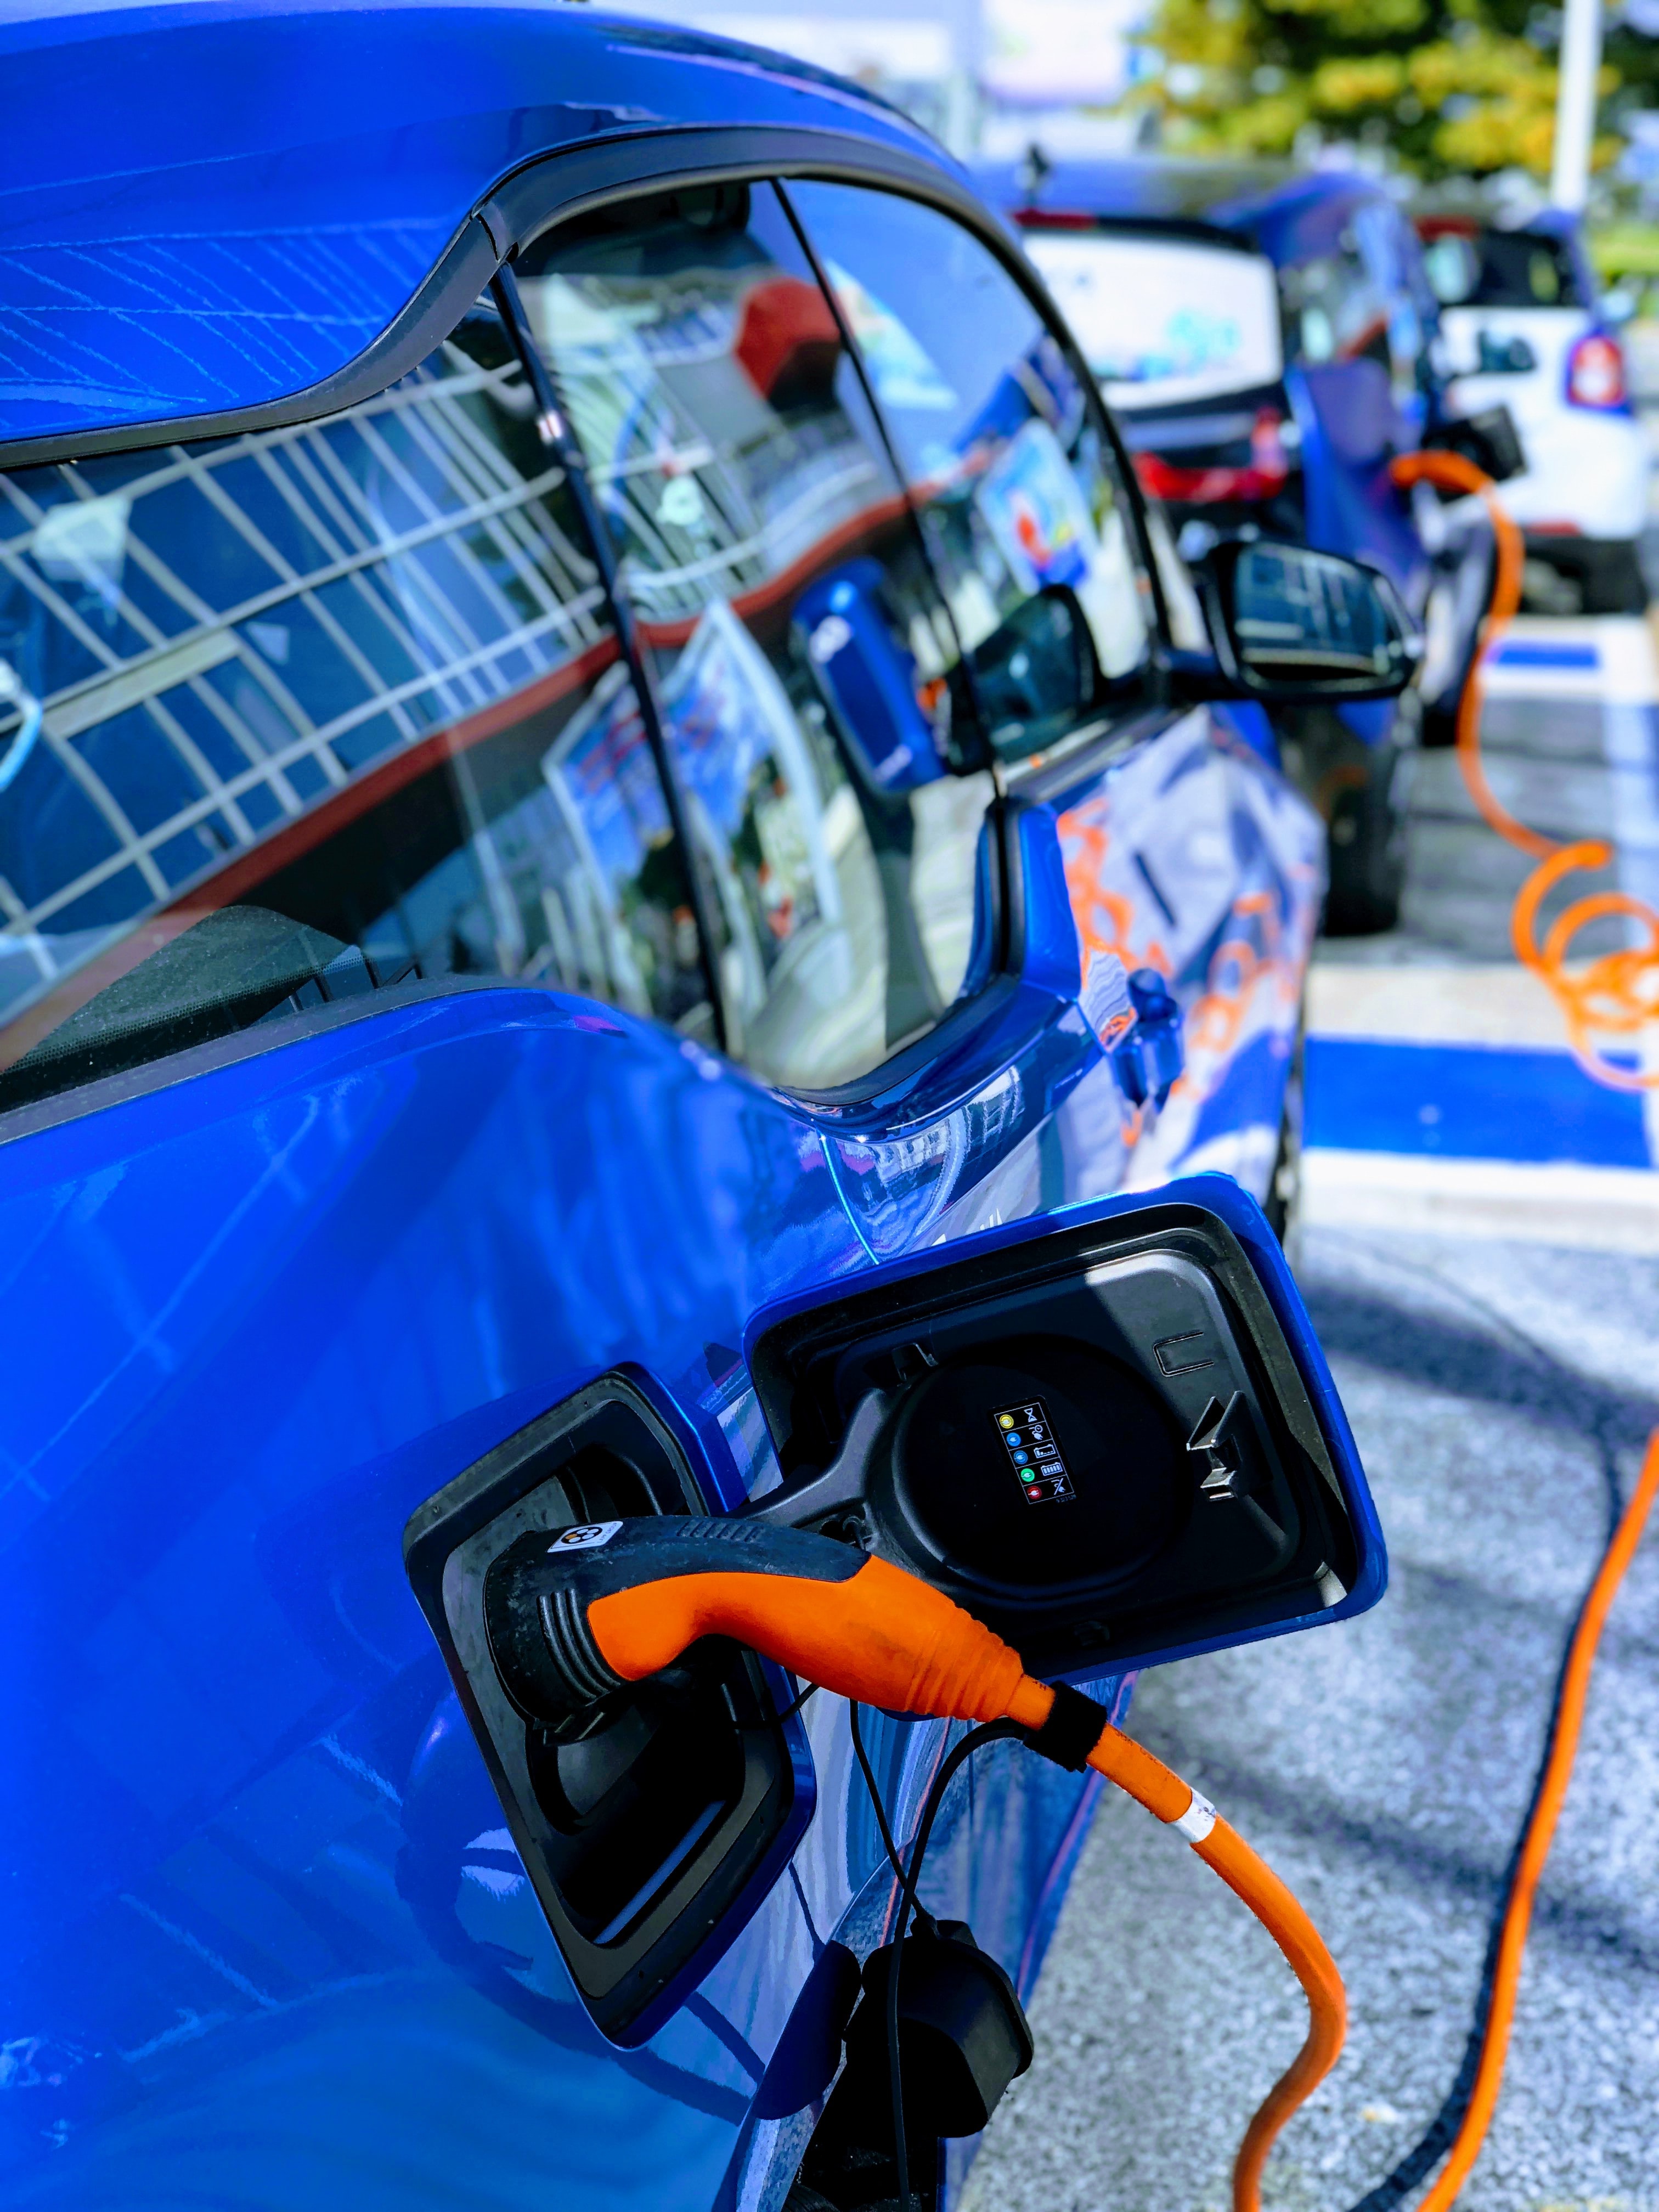 Photograph of electric vehicles charging. John Cameron / Unsplash